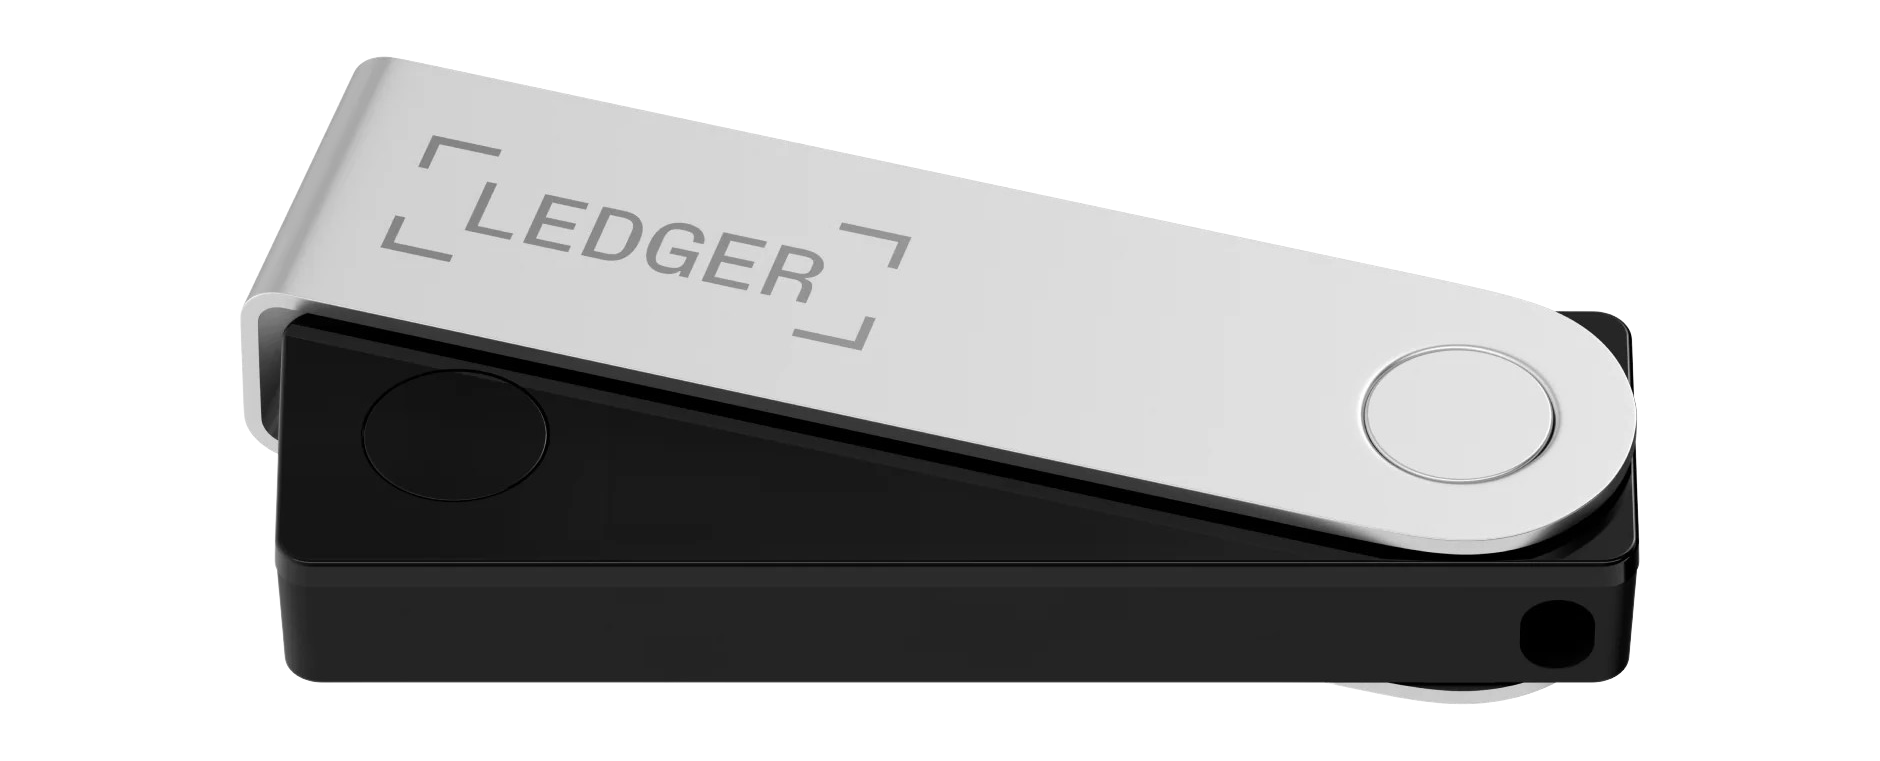 Ngrave Zero vs Ledger Nano X: Which Hardware Wallet Should You Buy?